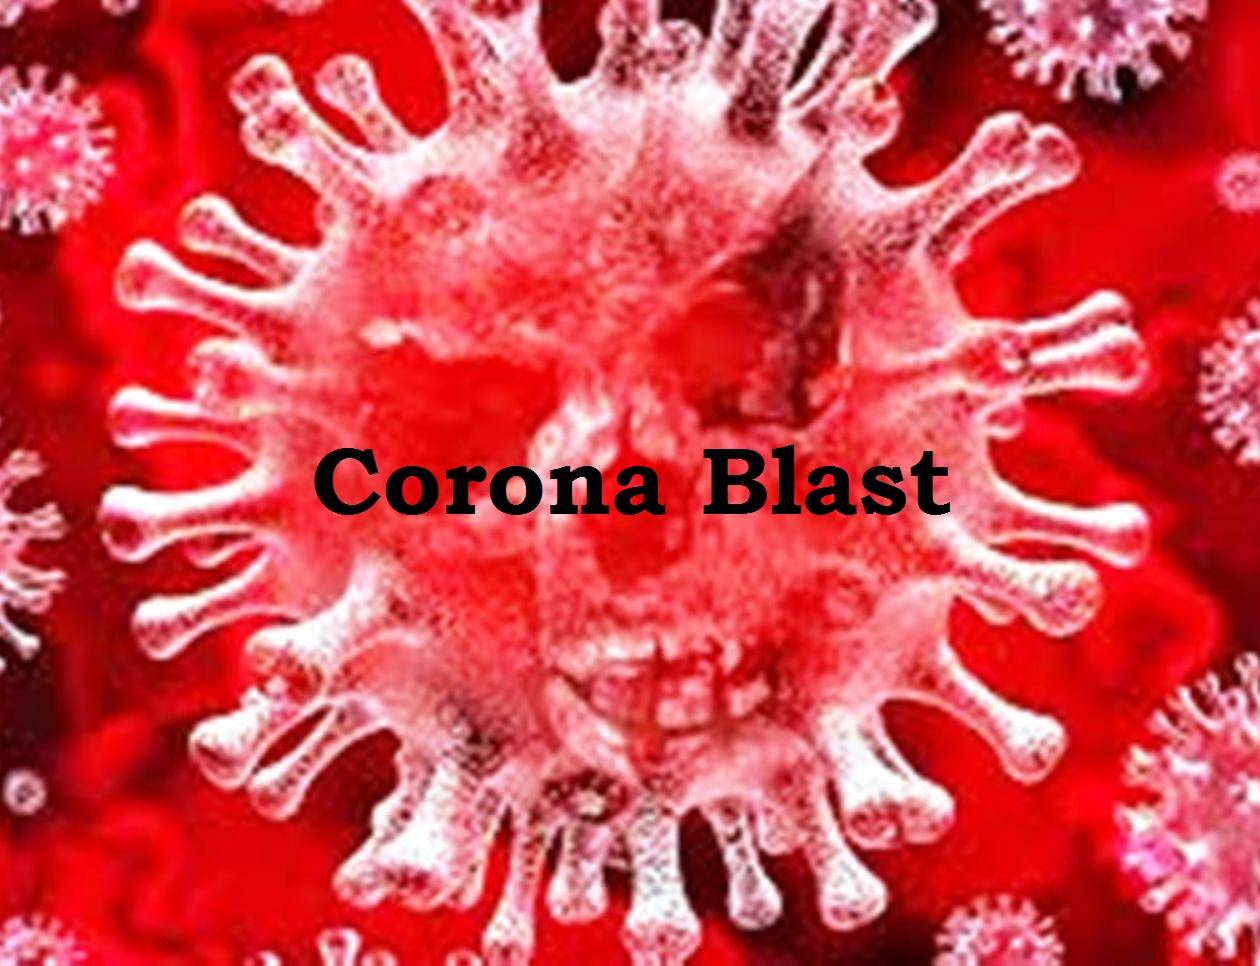 कोरोना Update 17-09-2020 आज फिर कोरोना का धमाका, 92 पॉजिटिव मिले